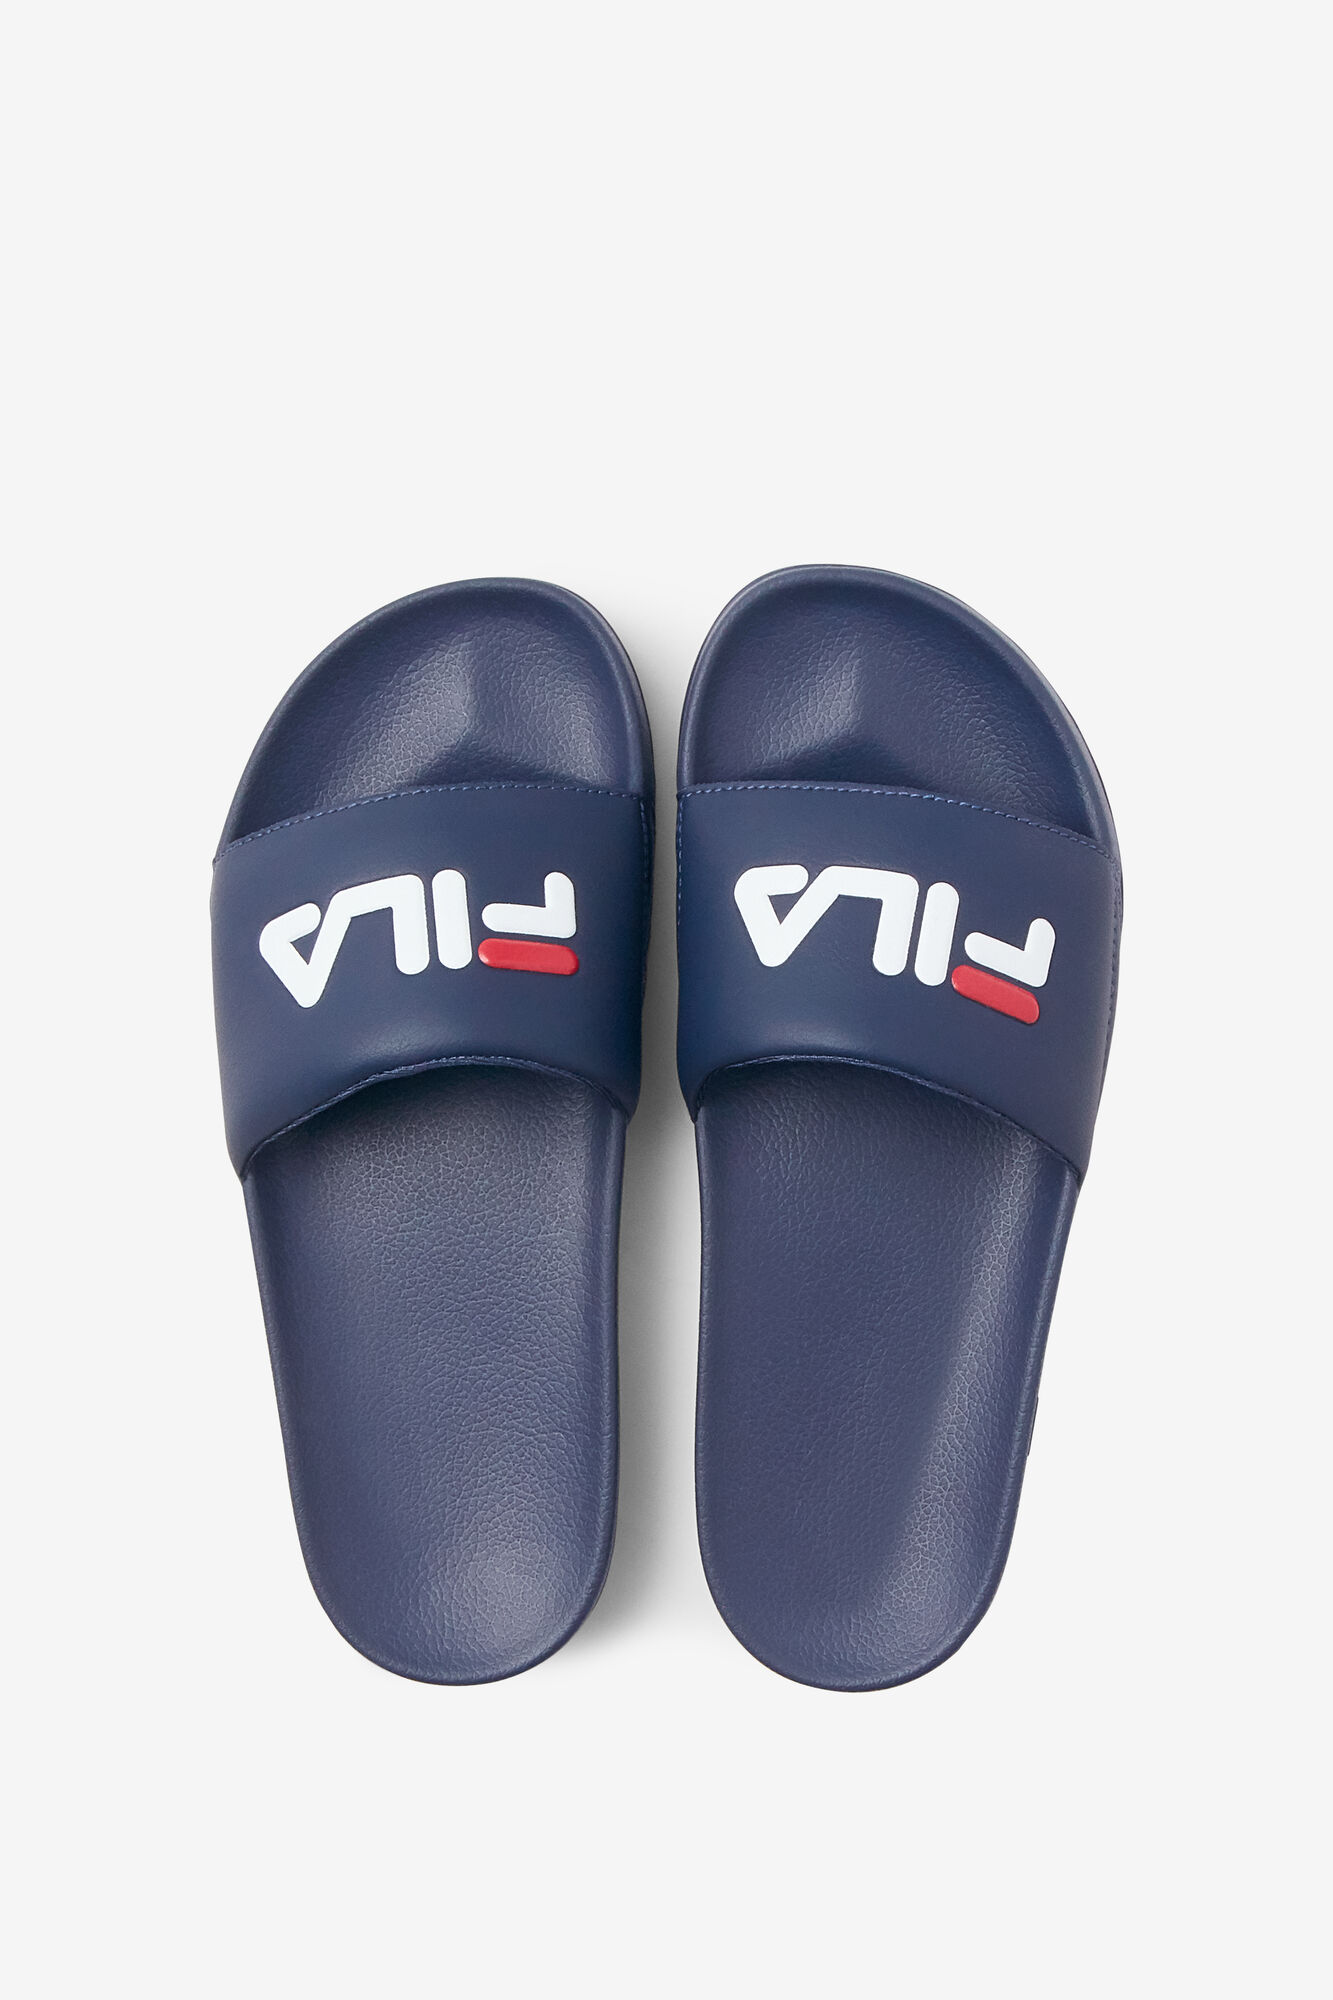 Drifter Men's Slide Sandals |